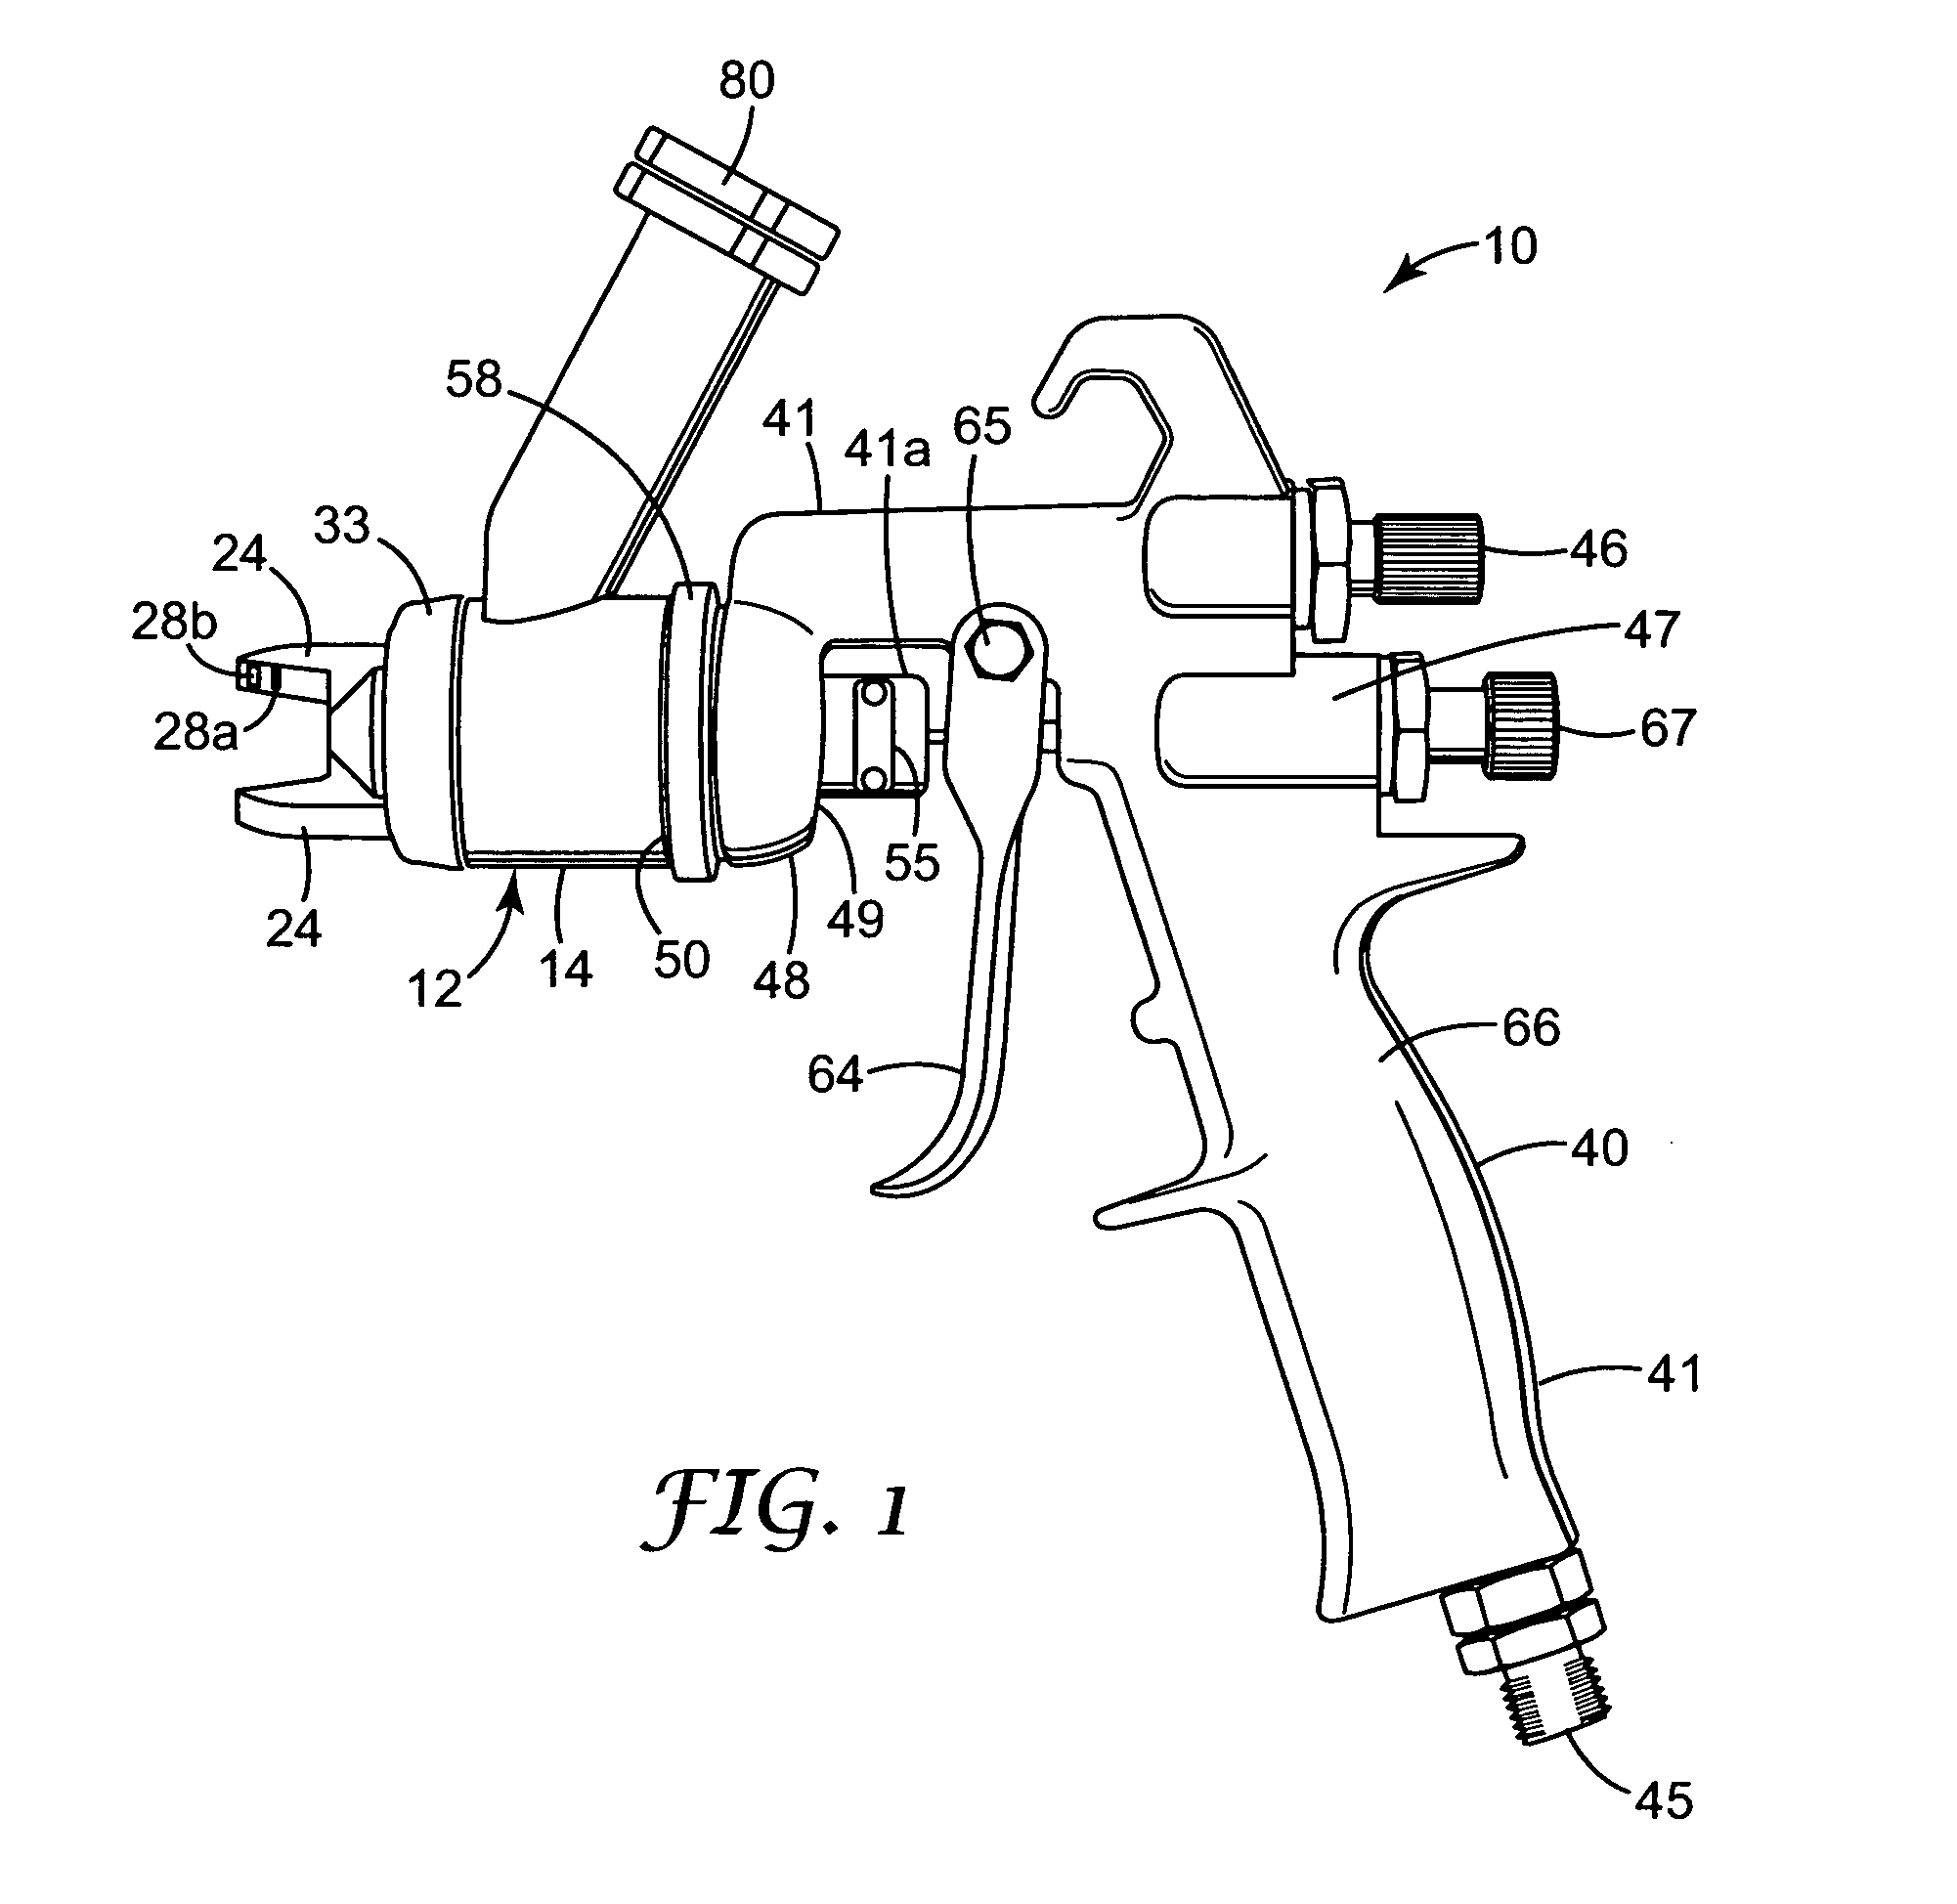 Liquid spray gun with non-circular horn air outlet passageways and apertures